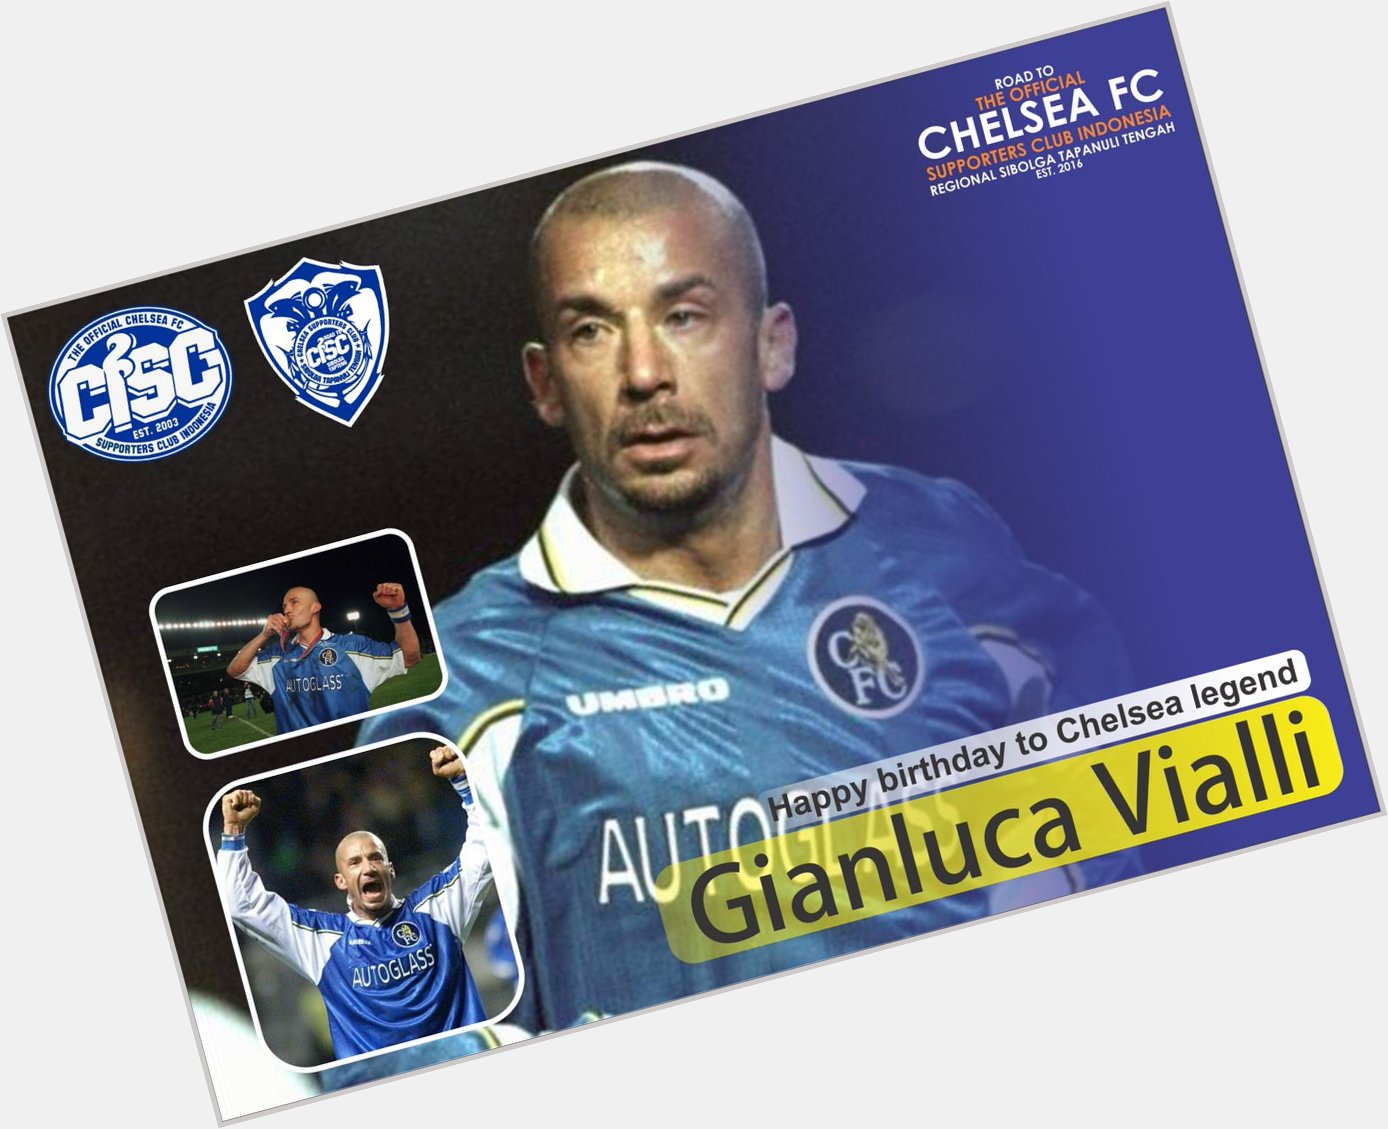  Happy birthday to Chelsea legend Gianluca Vialli!  